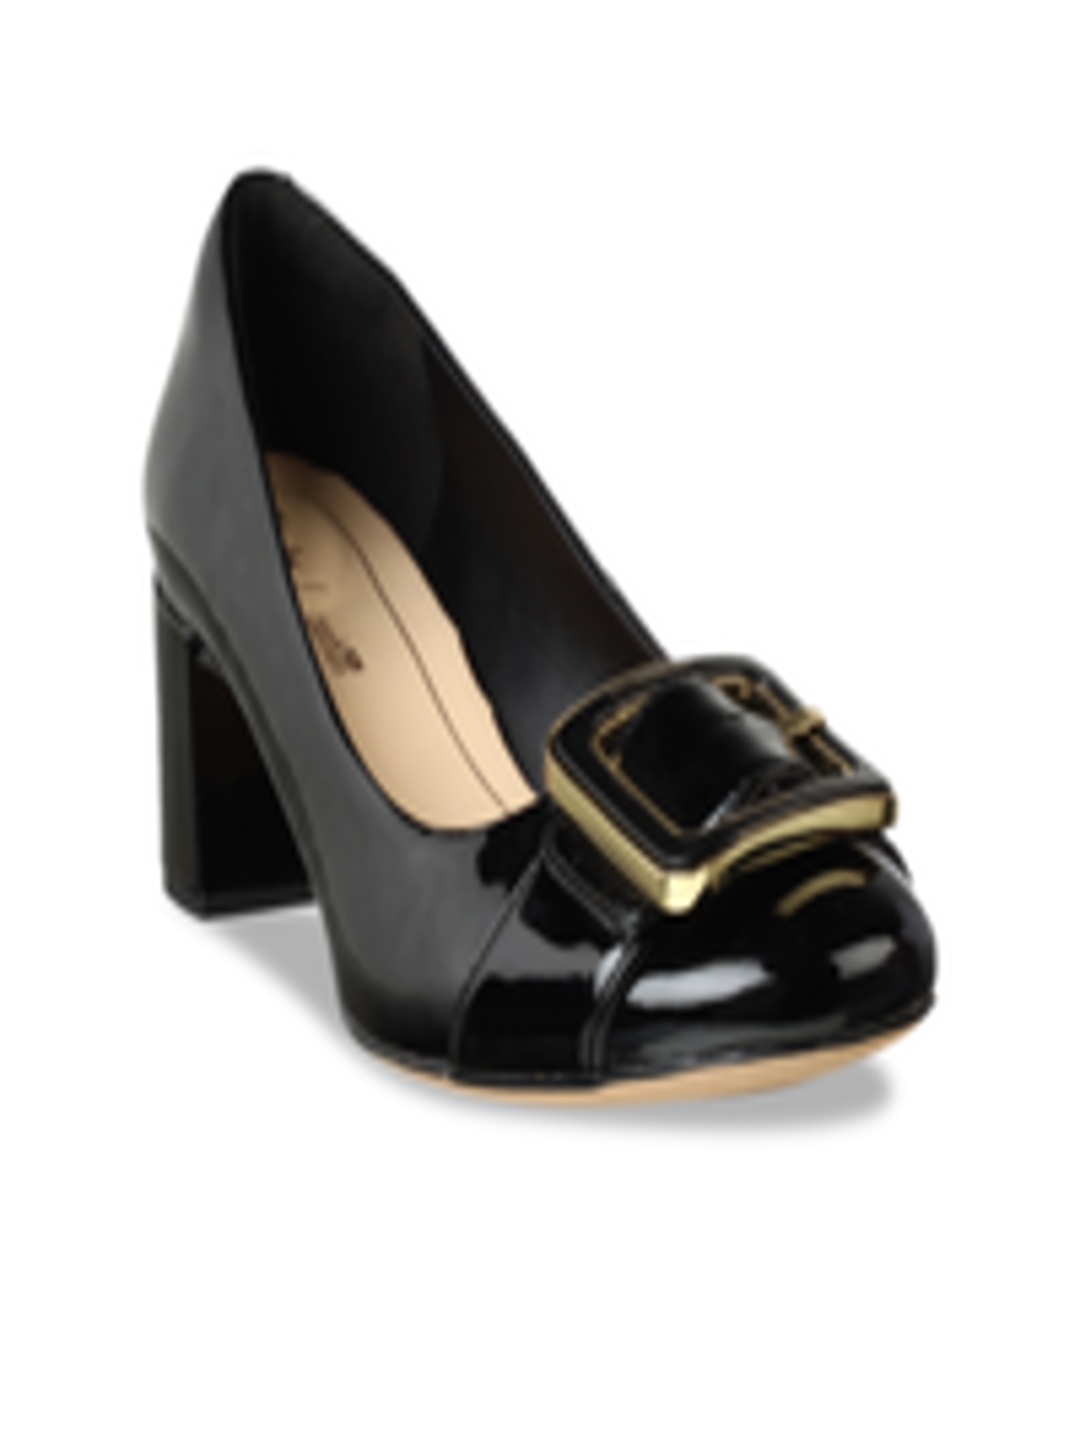 Buy Clarks Women Black Solid Pumps - Heels for Women 9863525 | Myntra